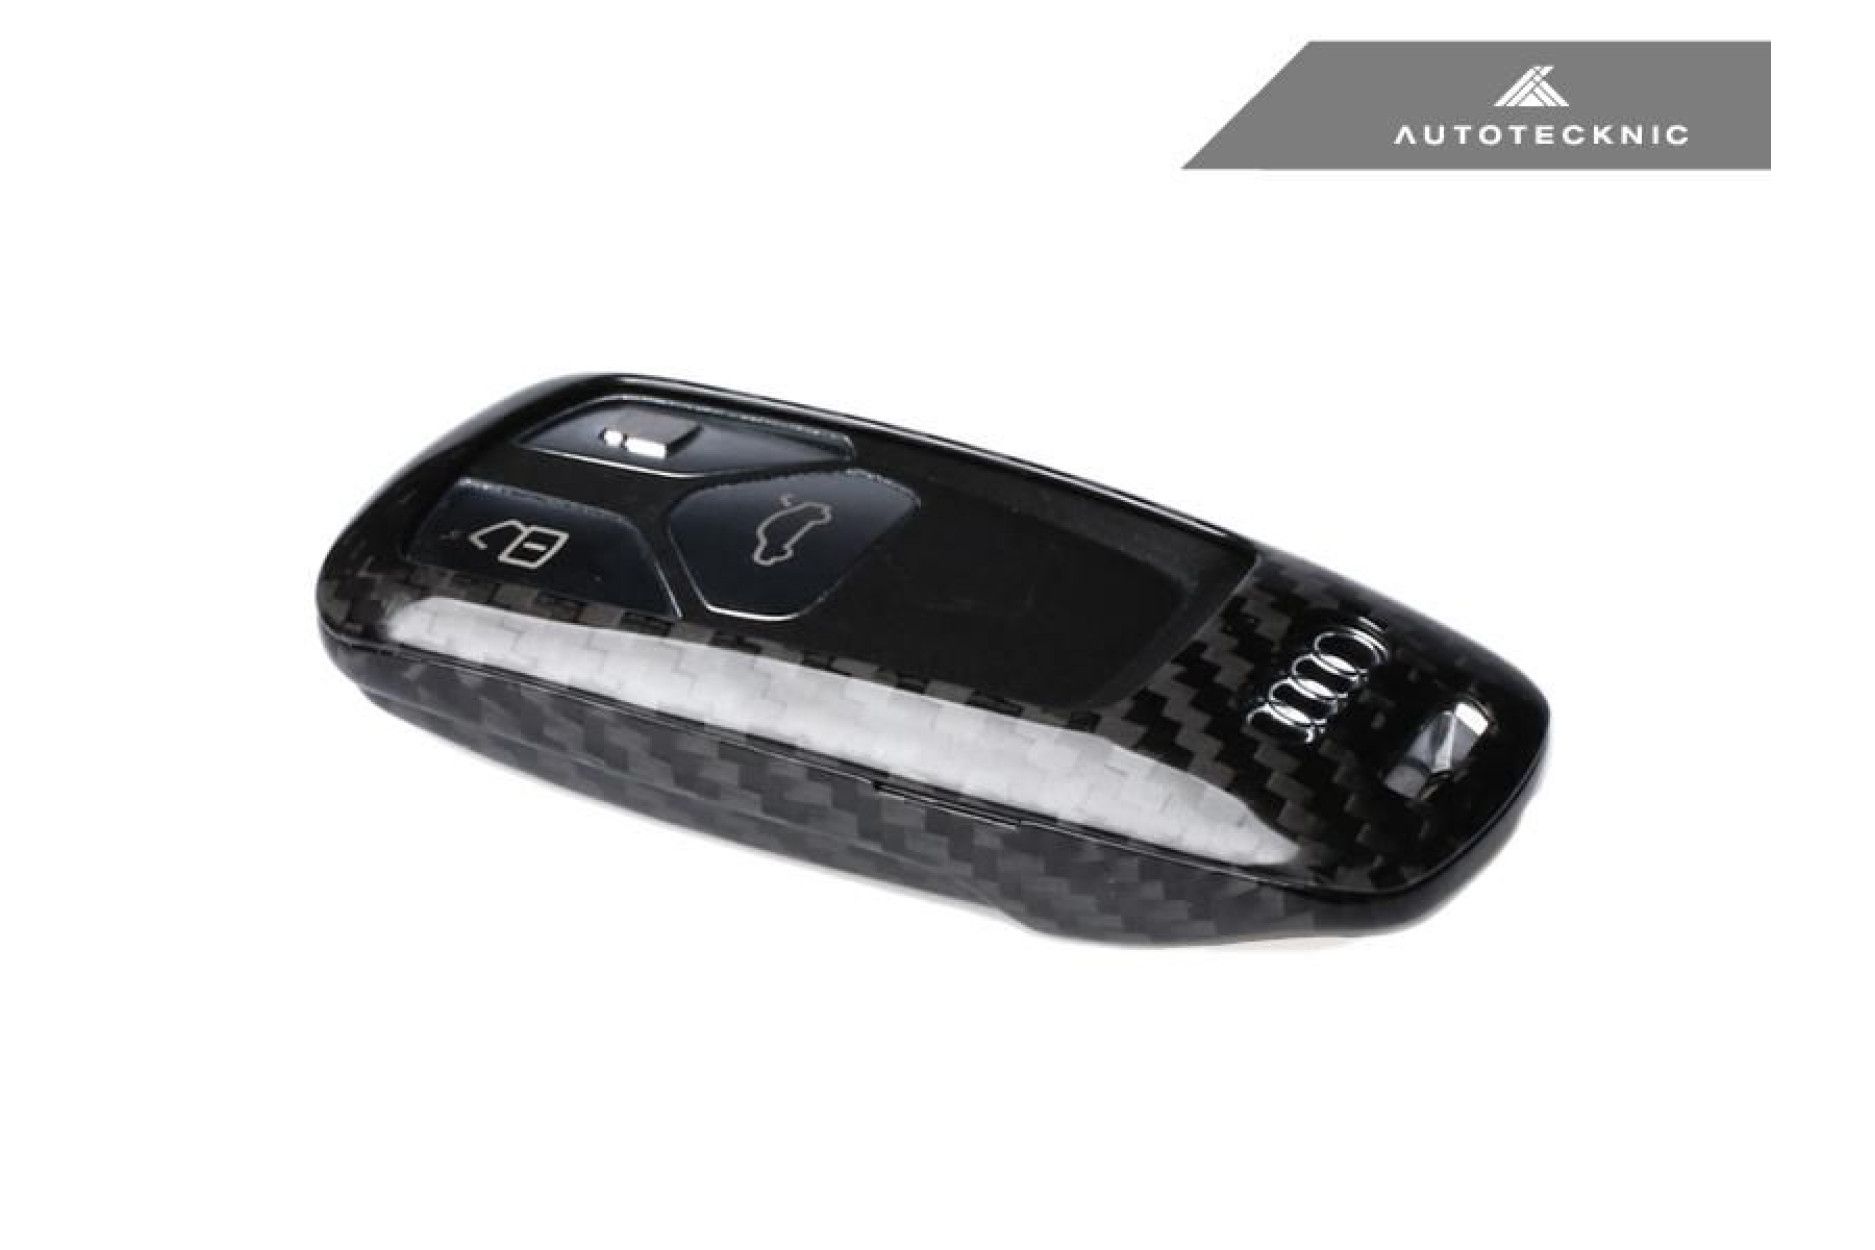 AutoTecknic Dry Carbon Schlüssel Cover für Audi Fahrzeuge 2017+ - online  kaufen bei CFD